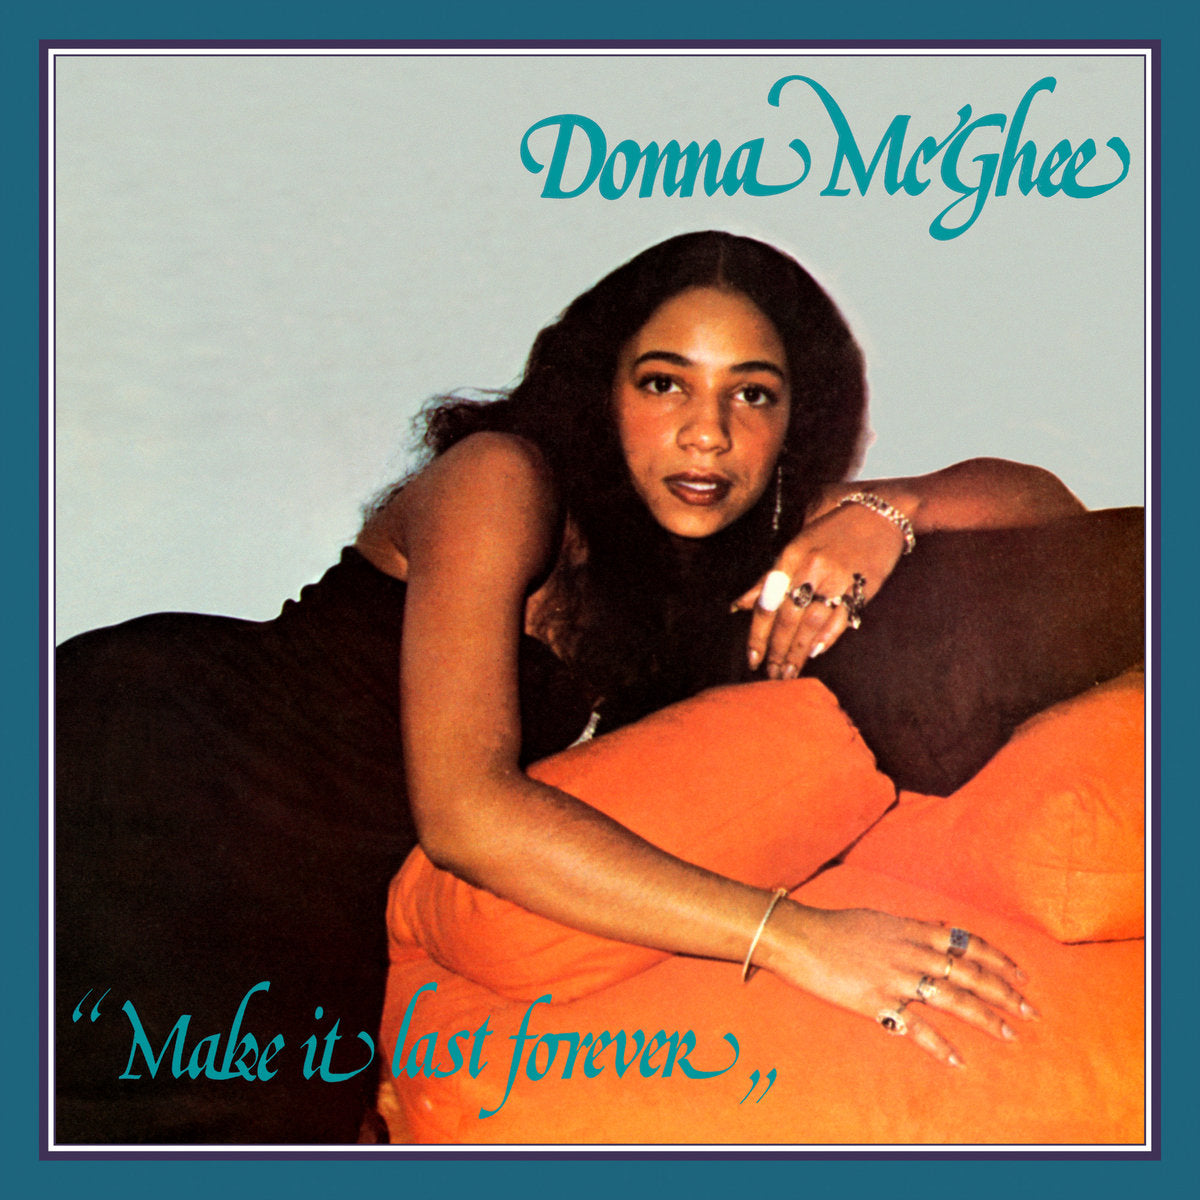 DONNA MCGHEE - MAKE IT LAST FOREVER Vinyl LP